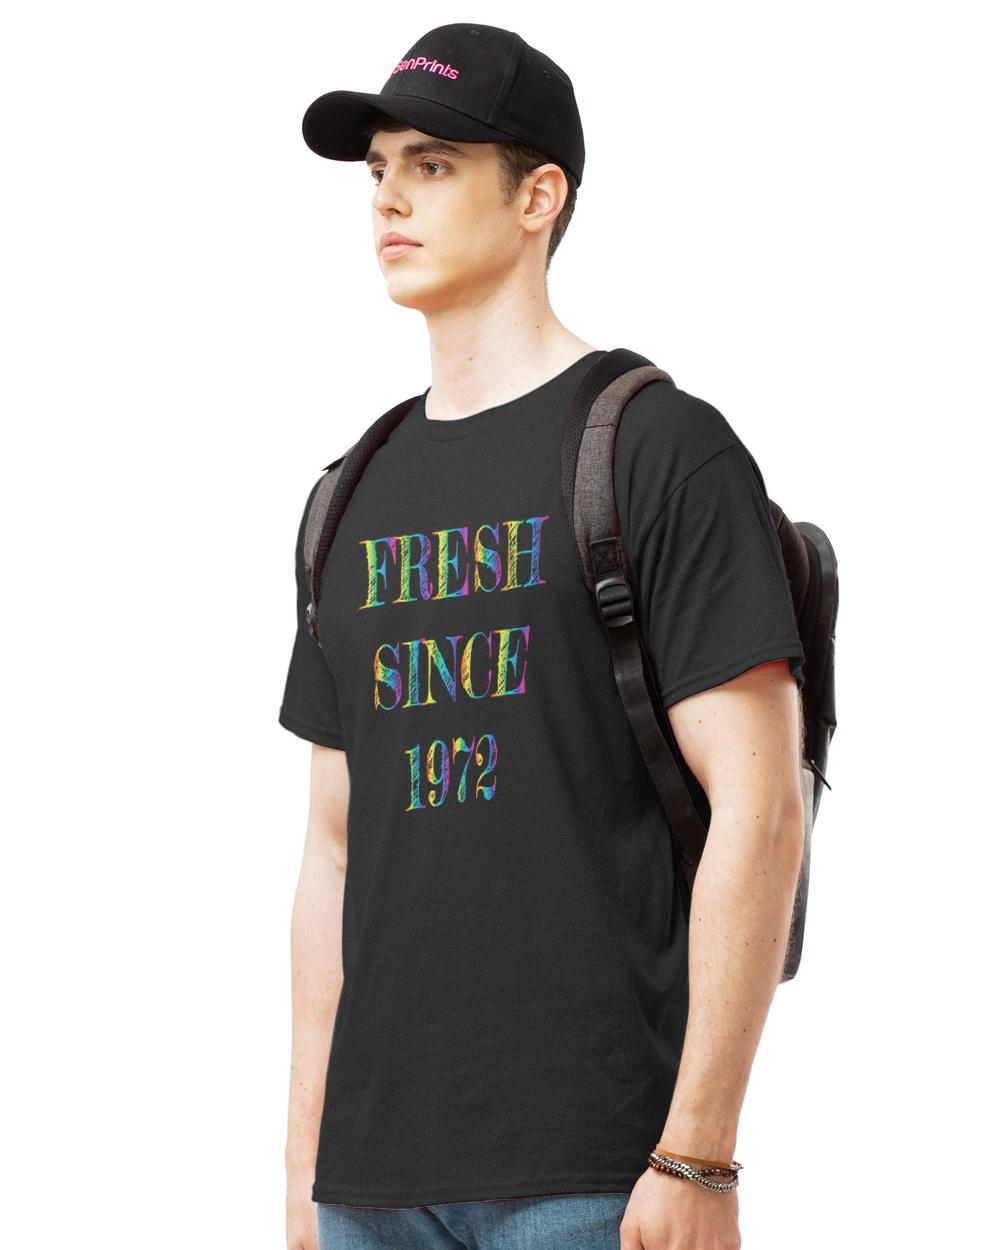 Vintage 1972 T- Shirt Fresh since 1972 T- Shirt